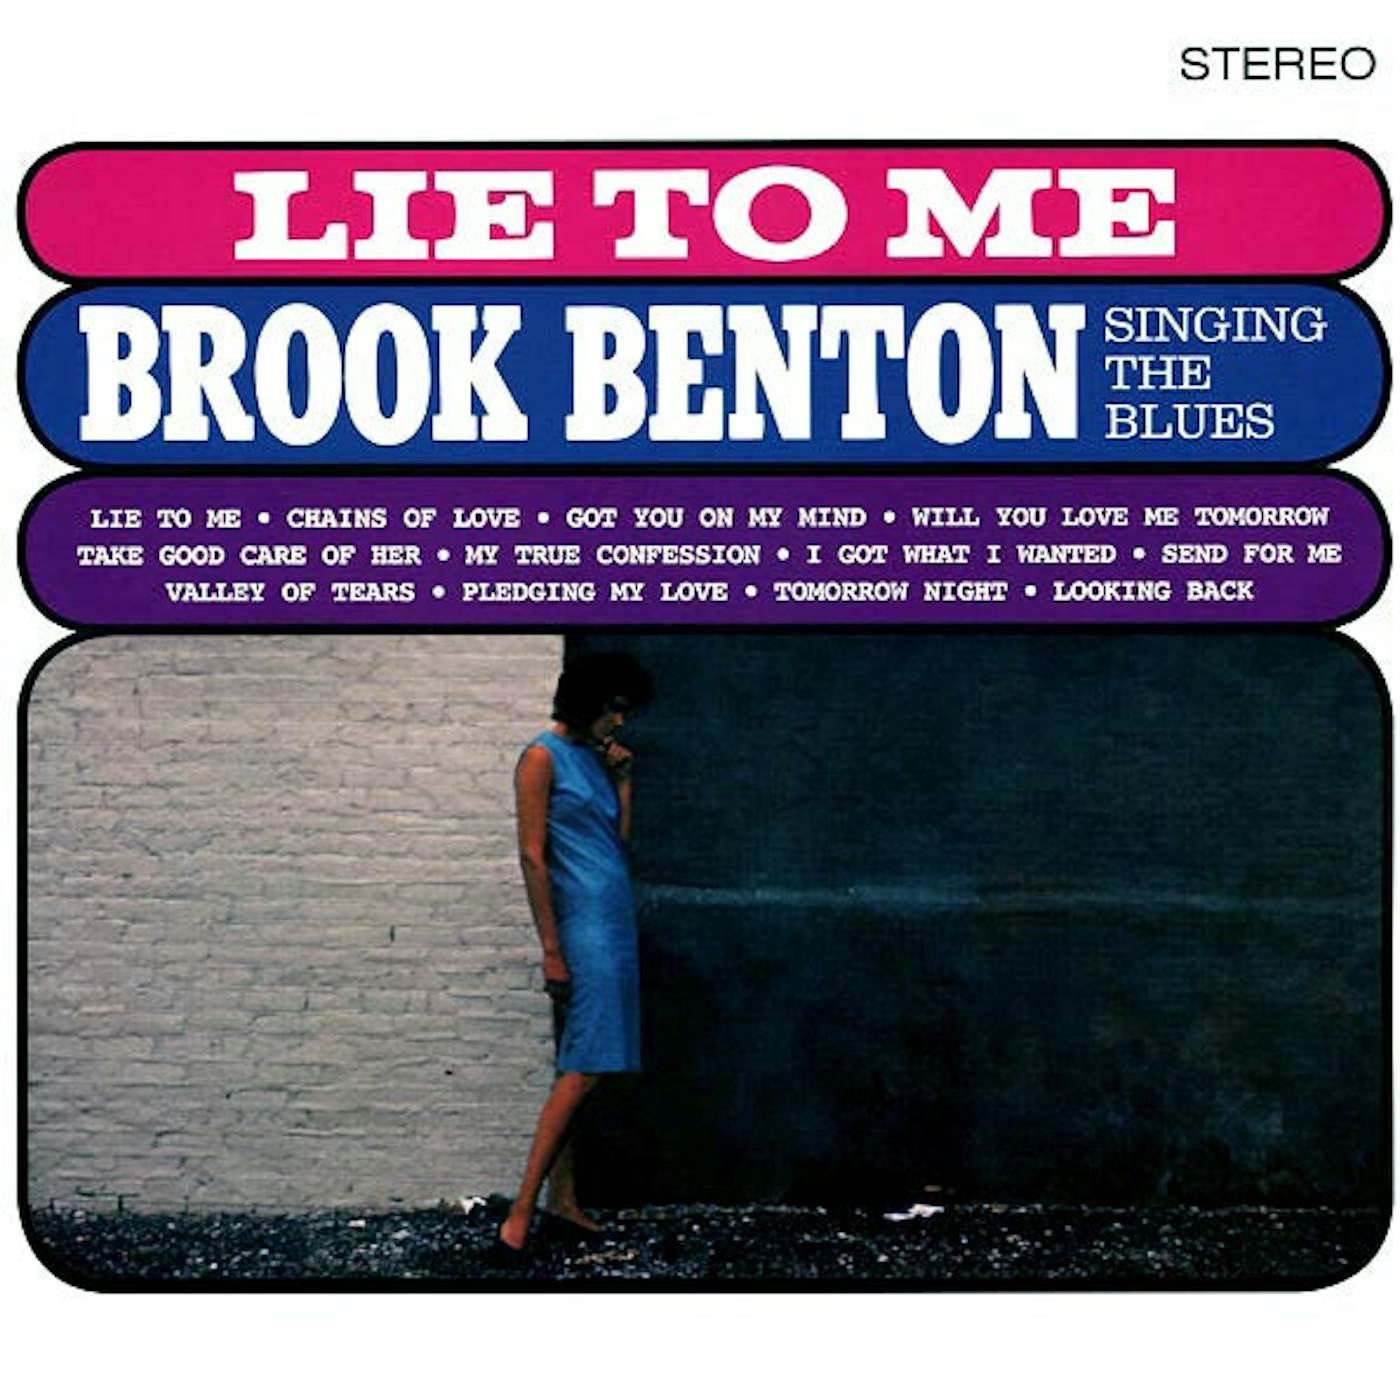 Brook Benton  LP -  Lie To Me: Singing The Blues (ltd. ed.) (180g) (Vinyl)